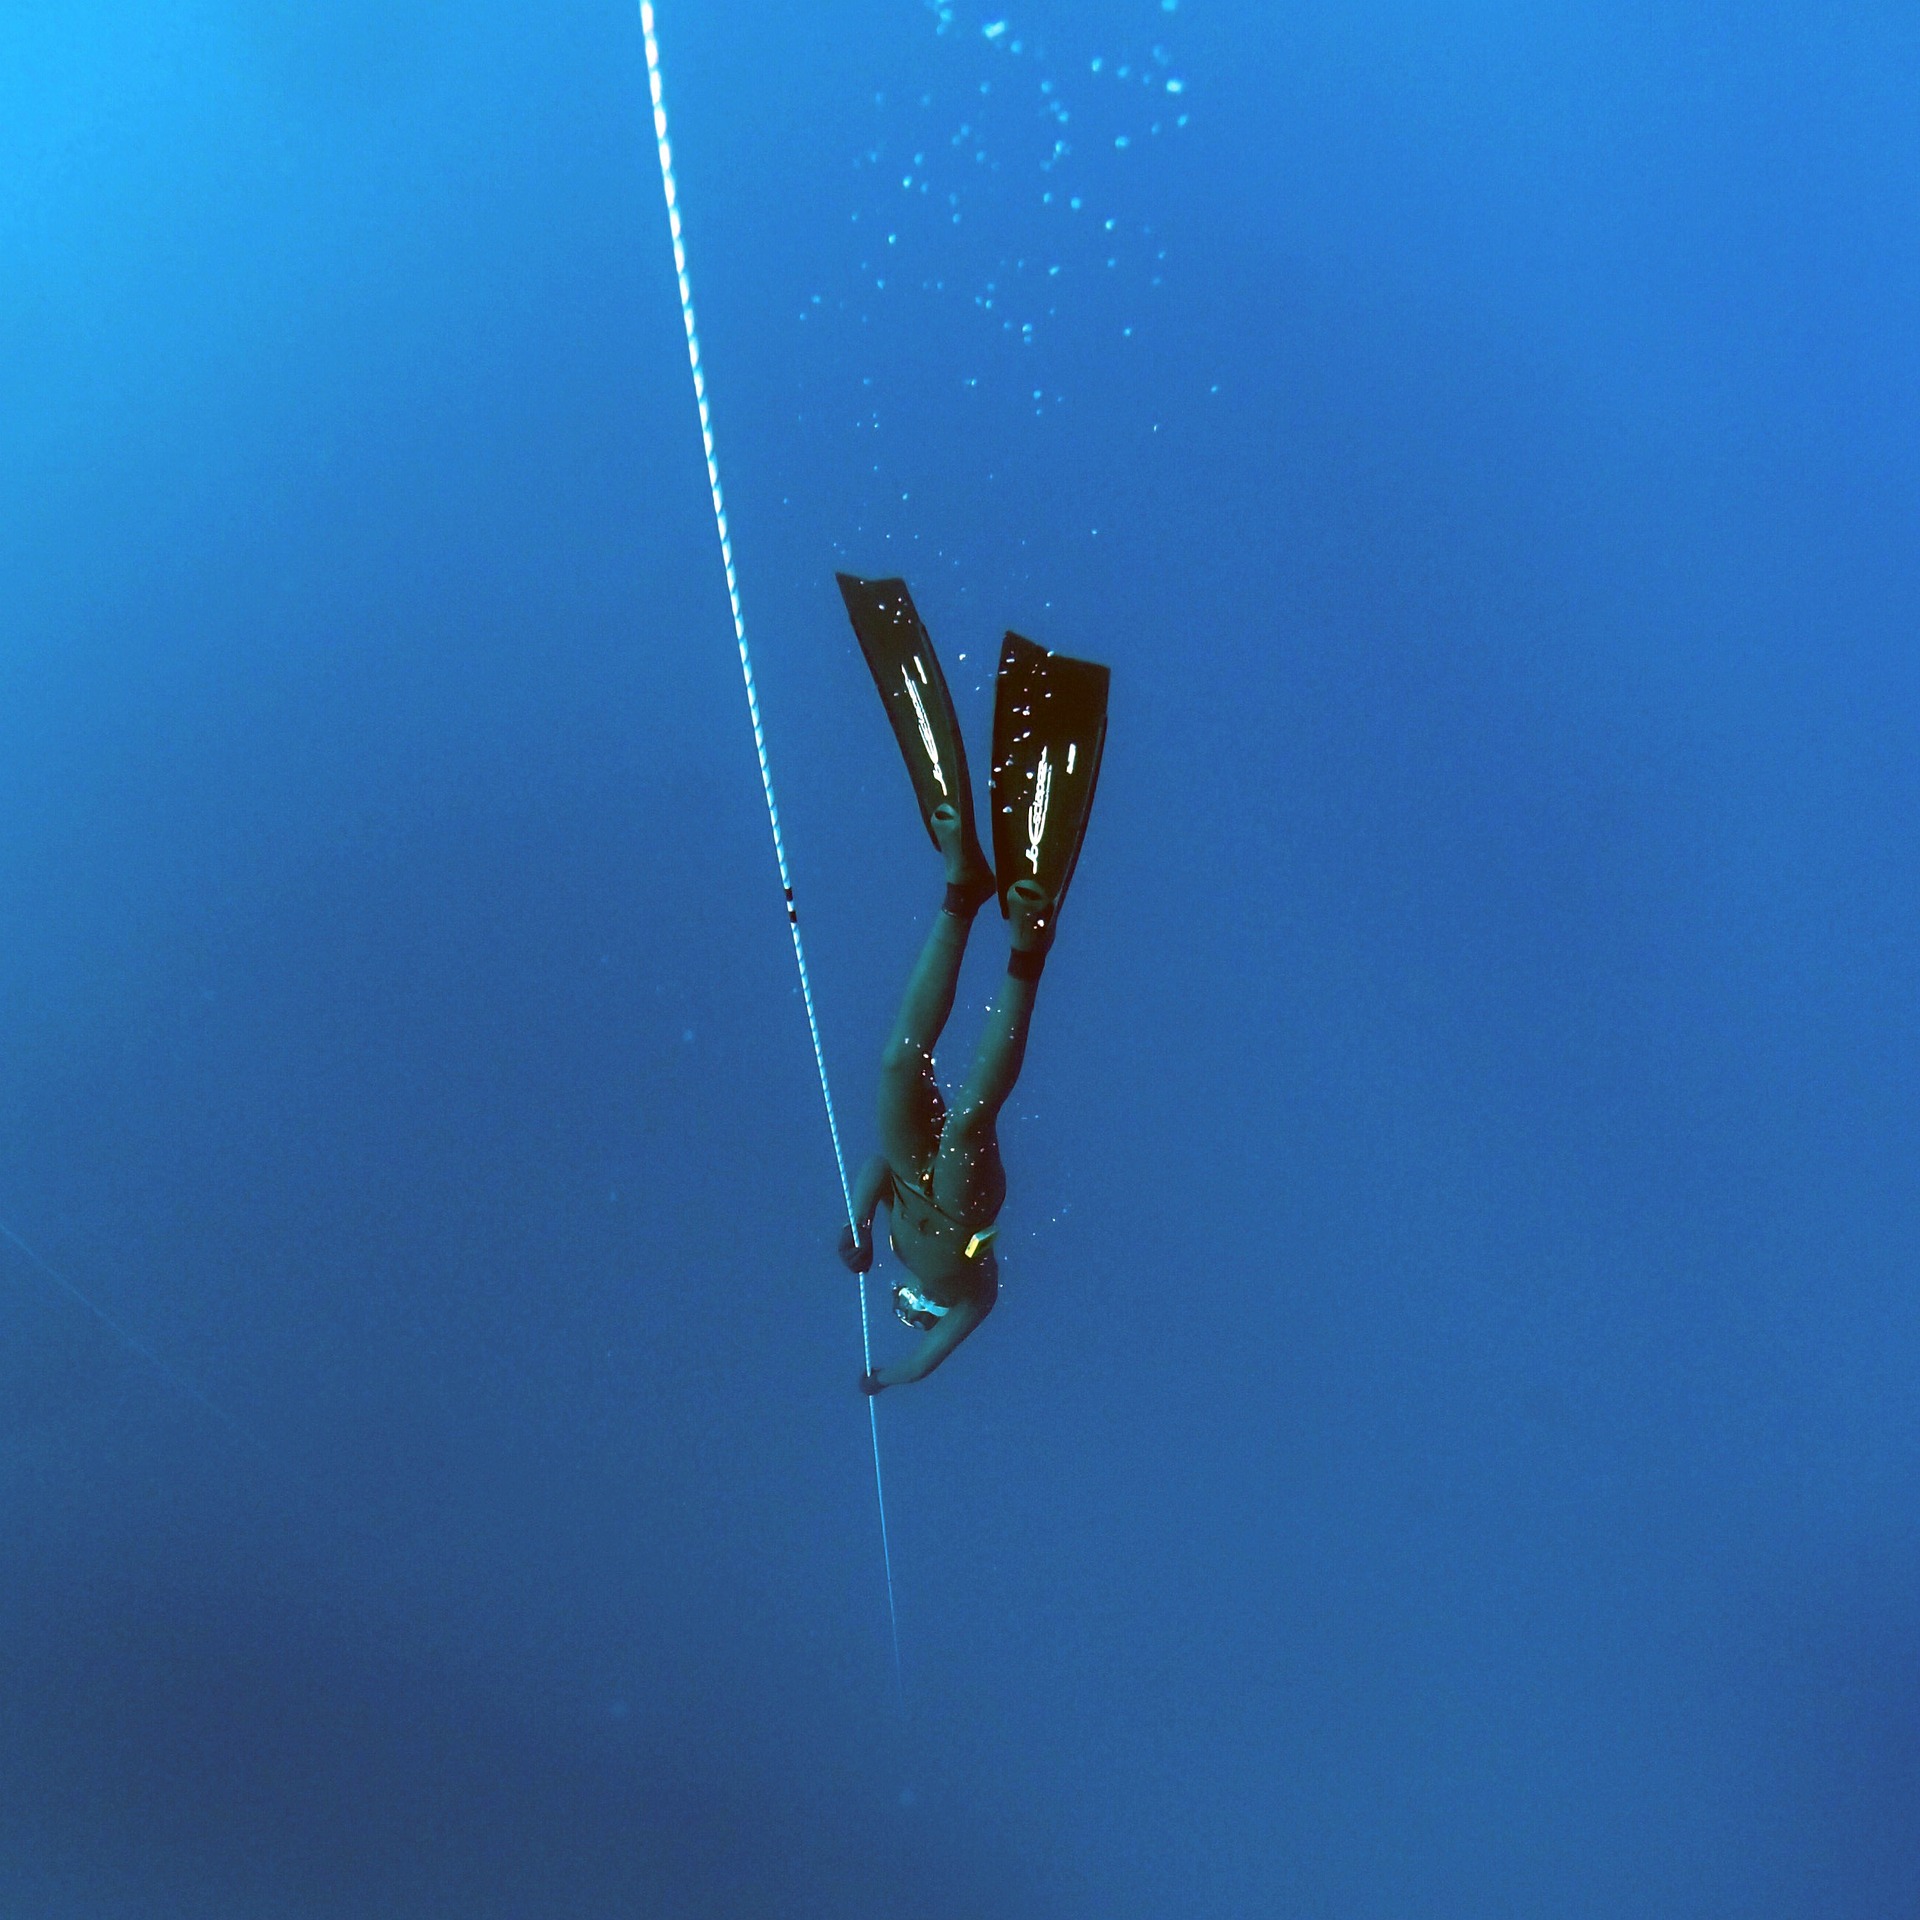 freediving-1383103_1920-jpg.990622